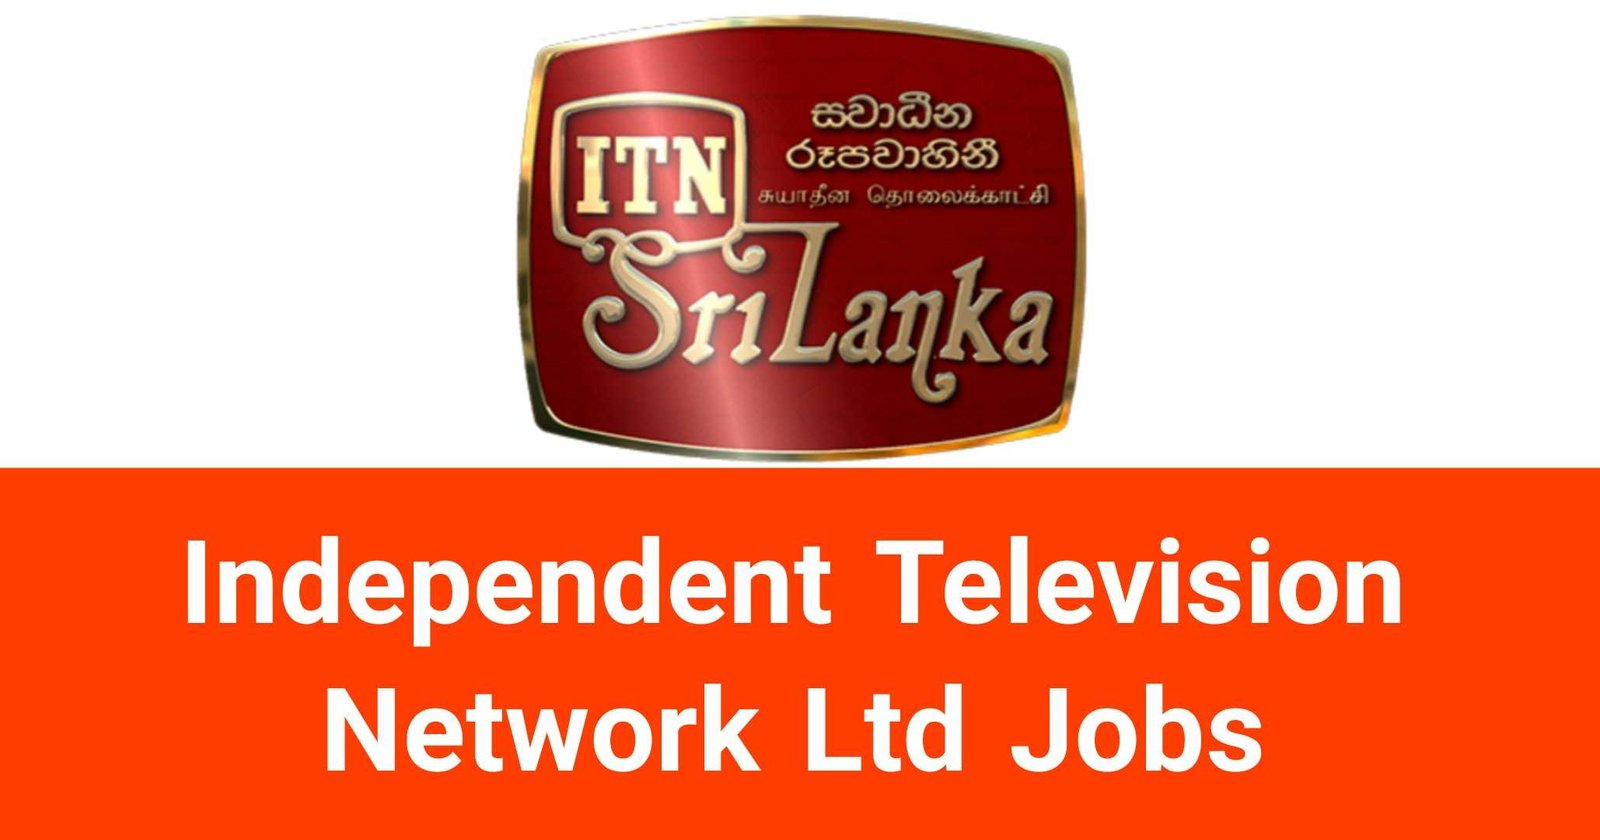 Independent Television Network Ltd Jobs Vacancies Careers